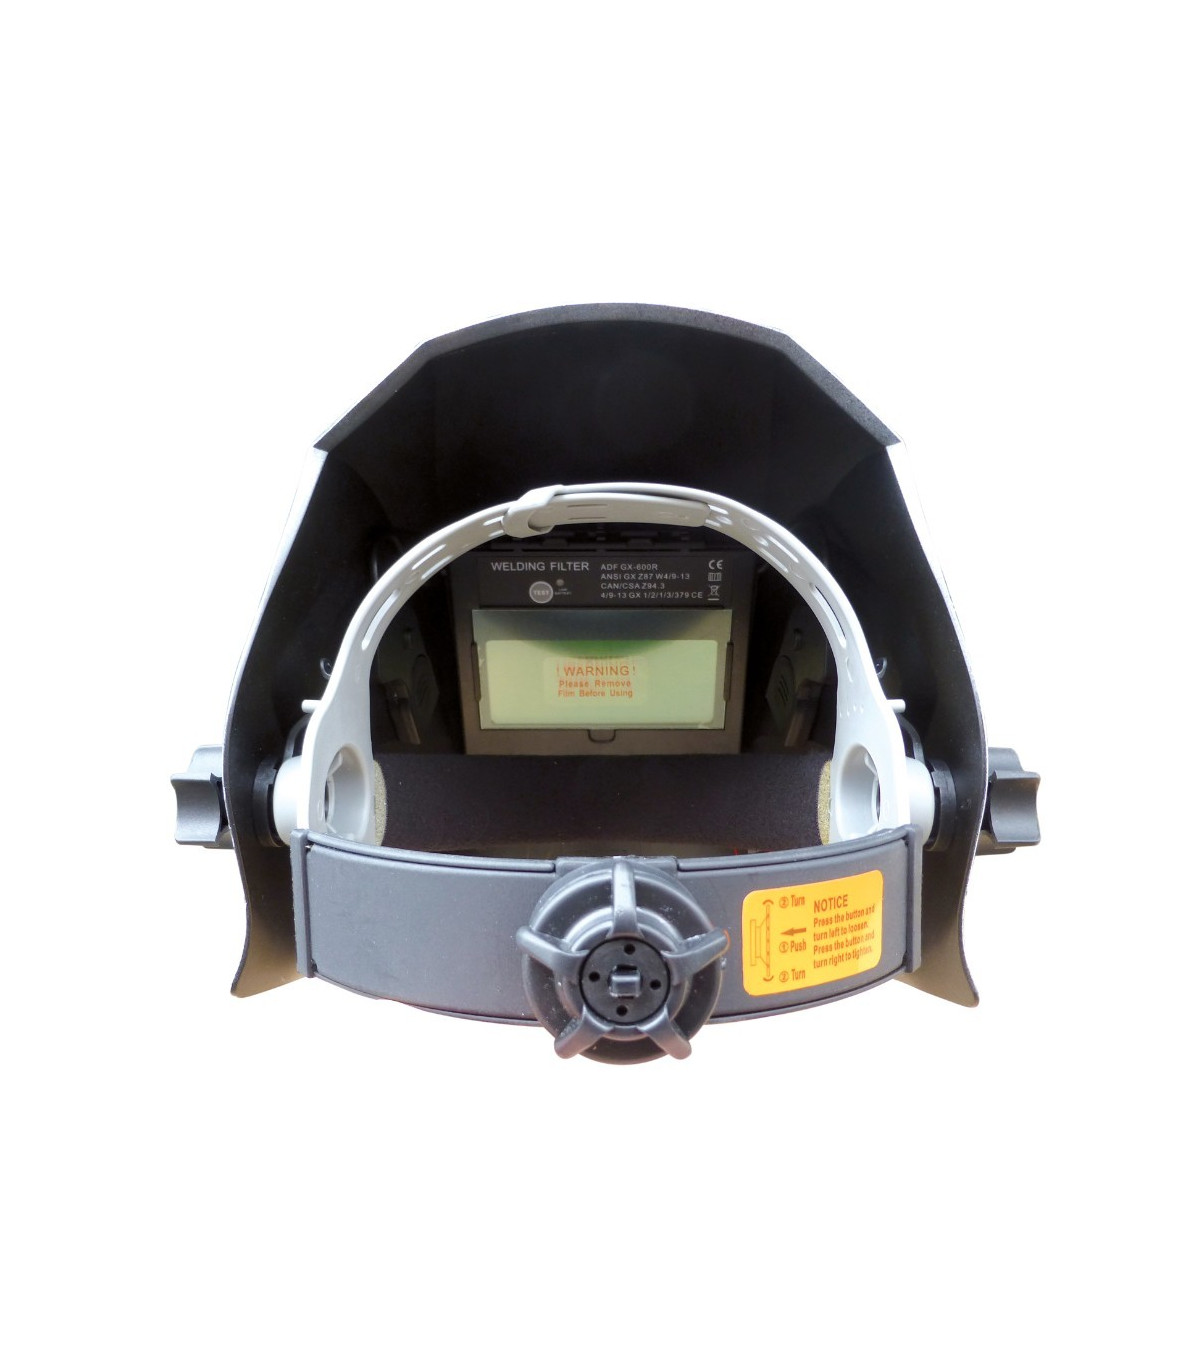 Pantalla de soldar automática SAFETOP Autoshell Plus-E, comprar online